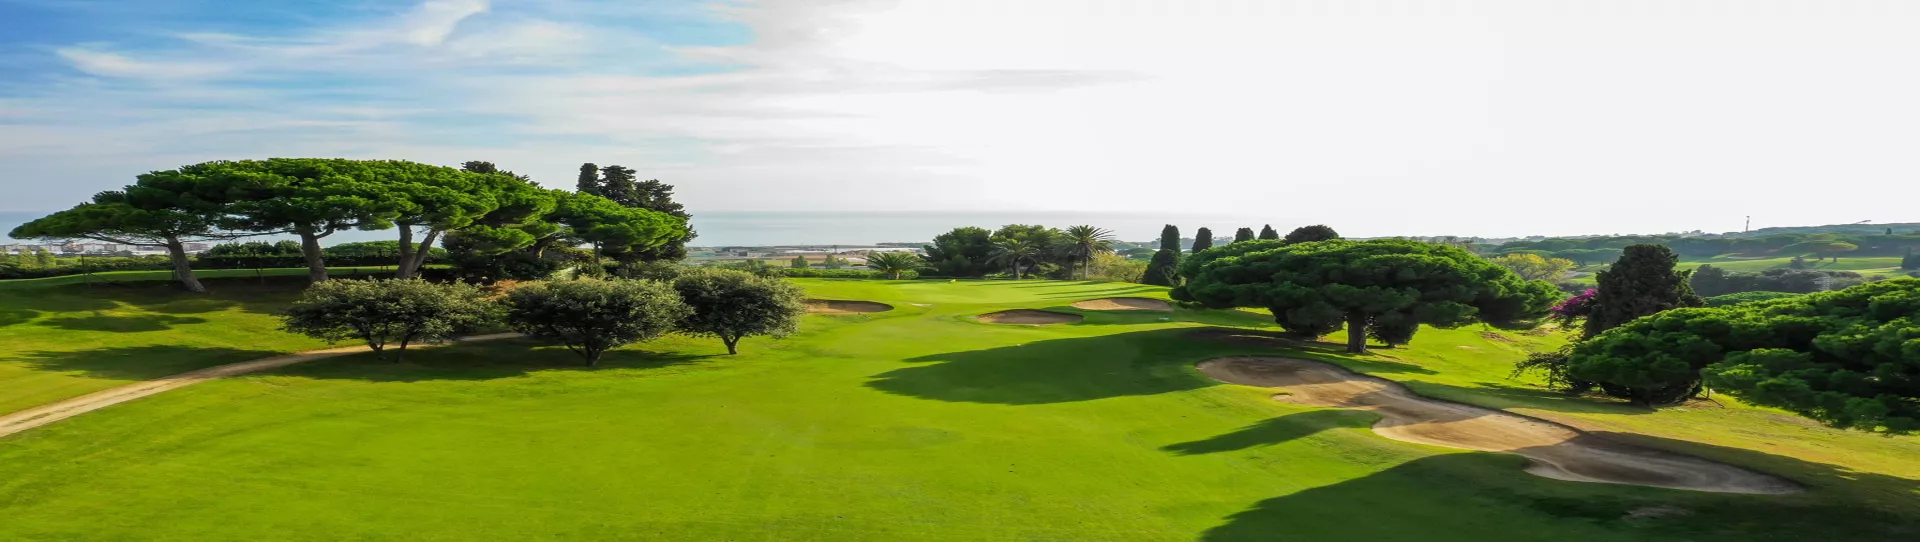 Spain golf courses - Llavaneras Golf Course - Photo 1